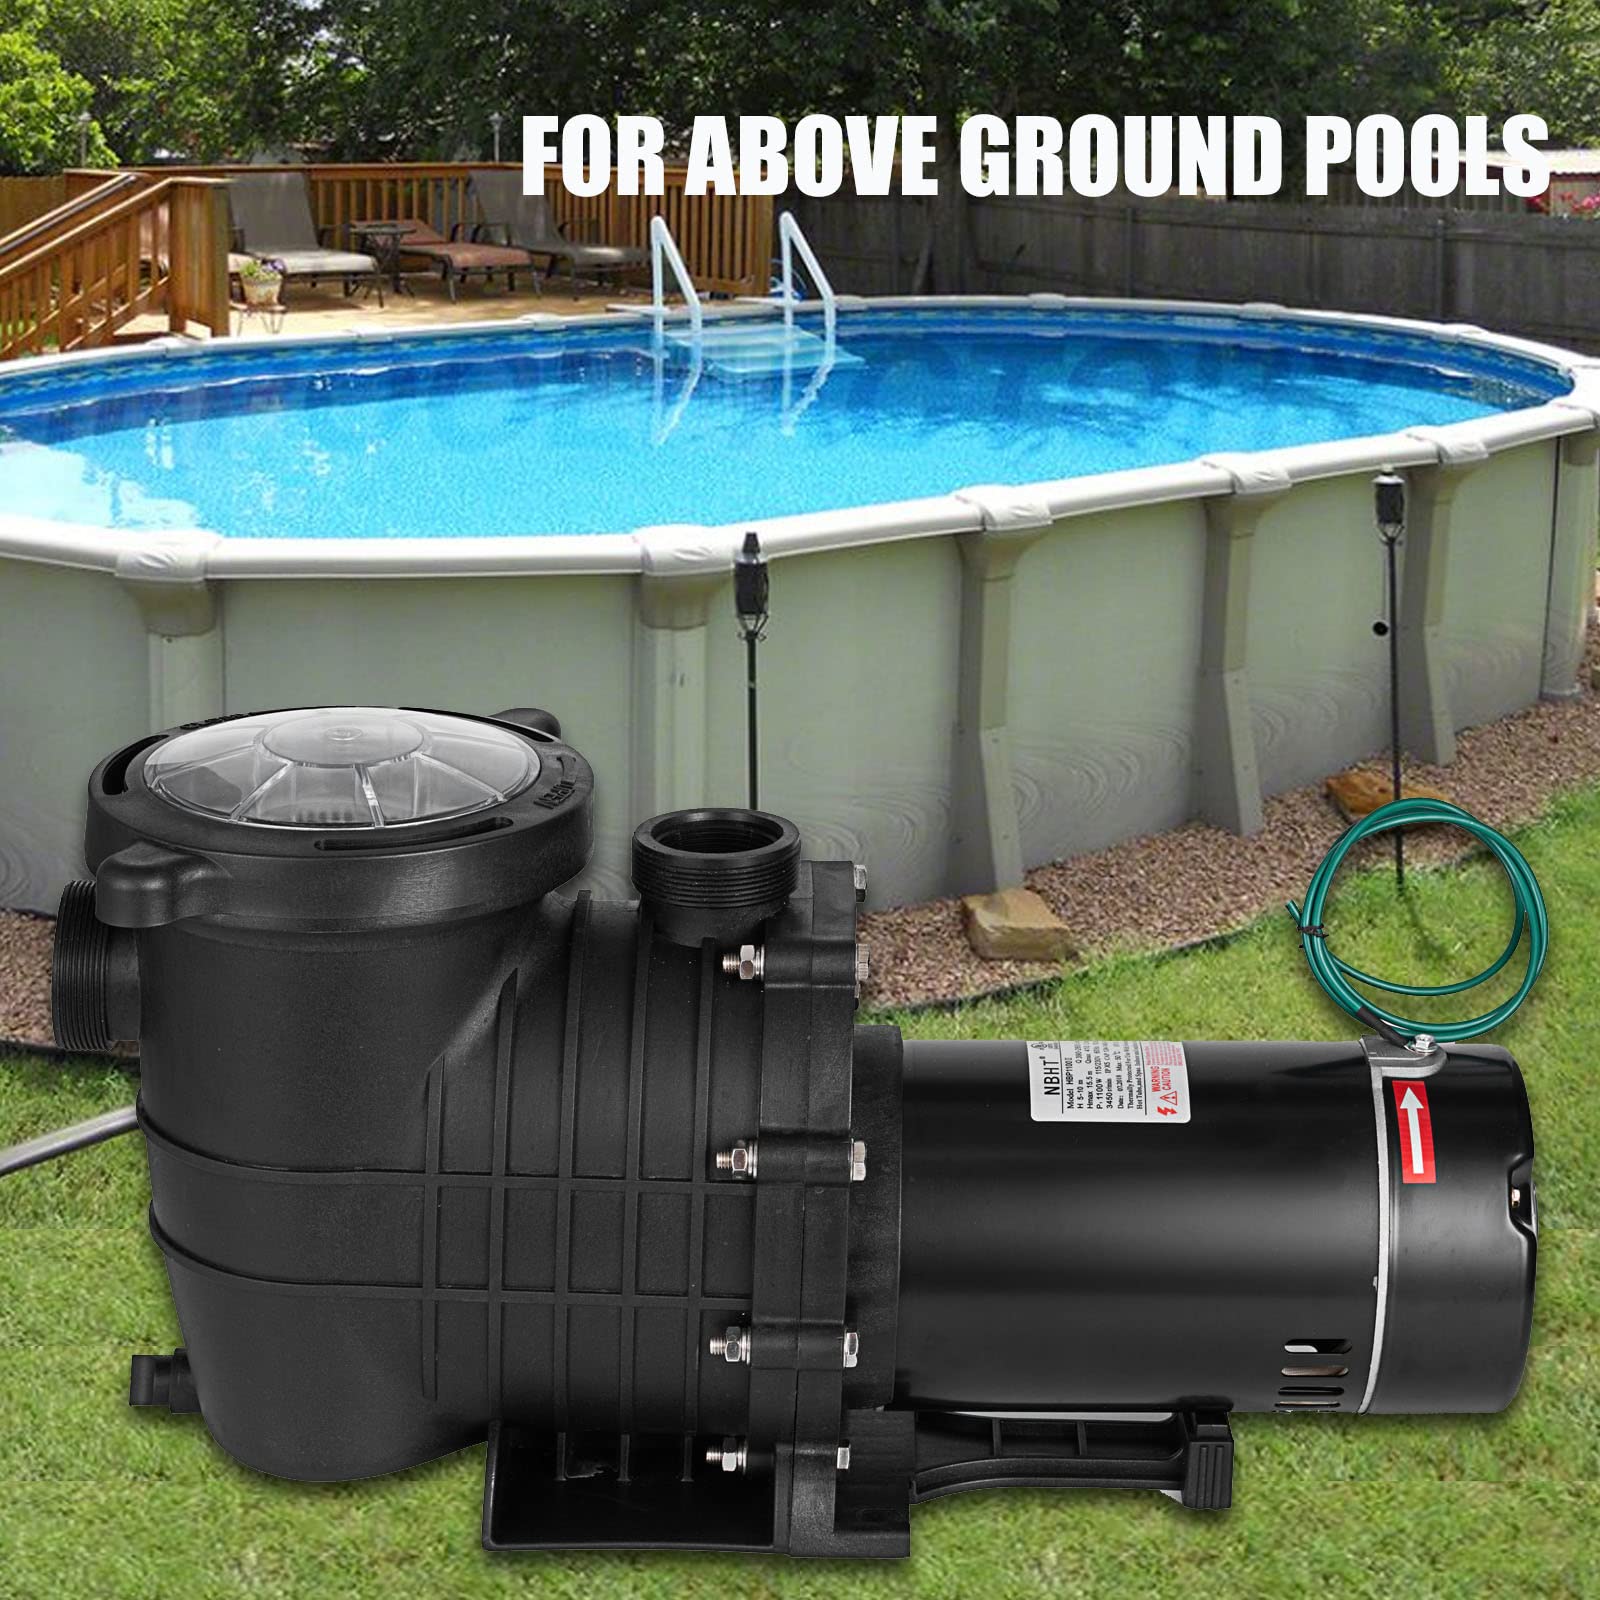 TOPDEEP 2HP Pool Pump Inground, Self Primming pool pump above ground, 6800 GPH Swimming pool pumps Dual voltage with Strainer Basket 1500W